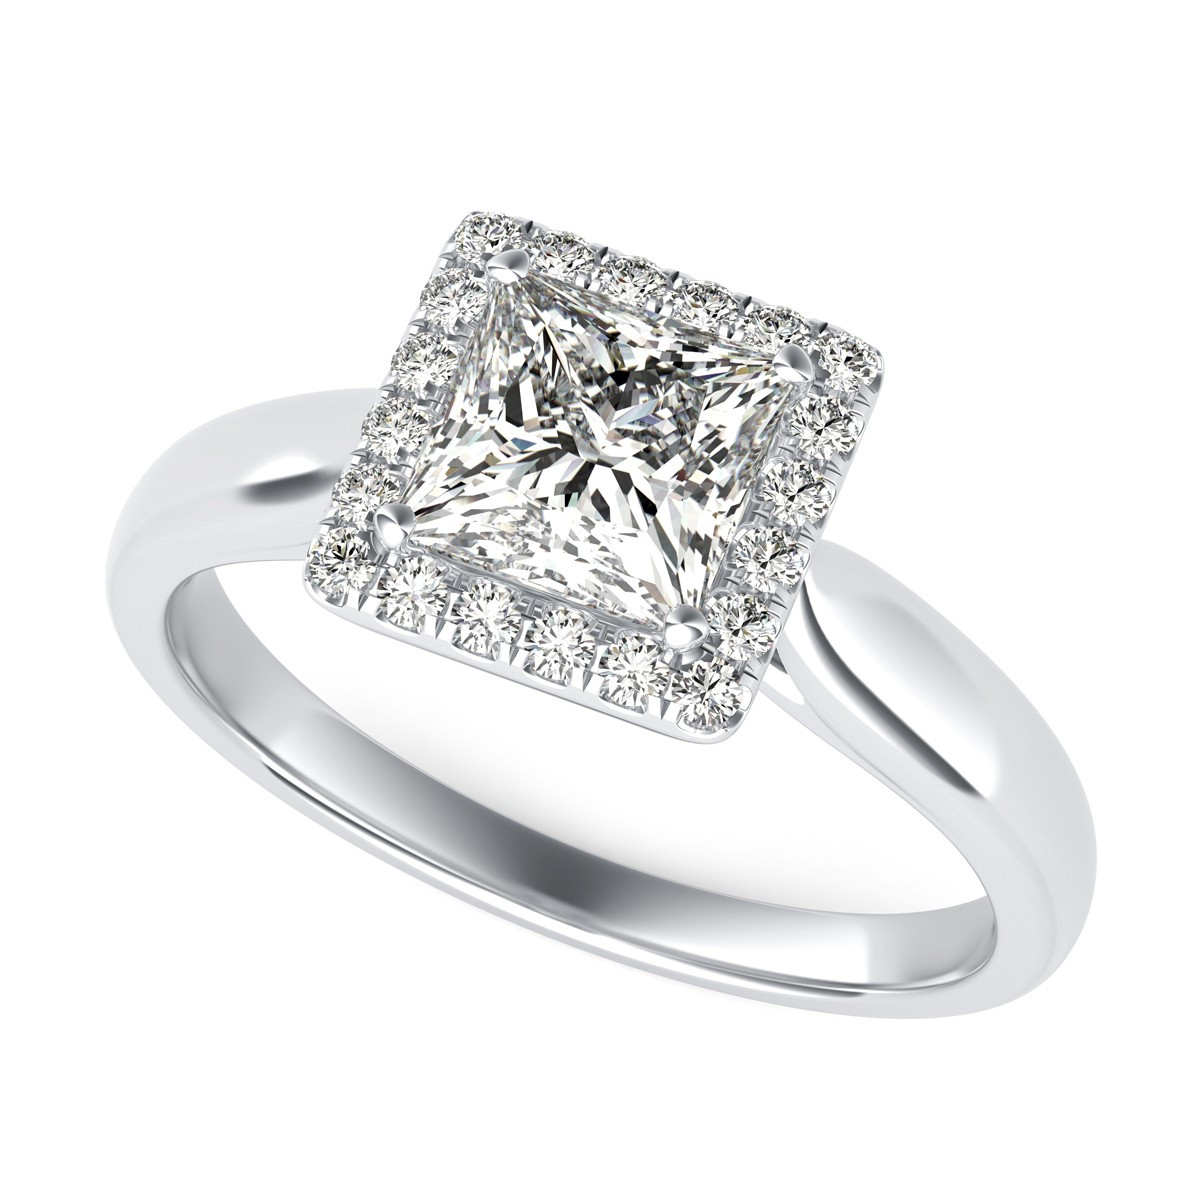 Princess Cut Halo Engagement Rings
 Halo Diamond Engagement Ring